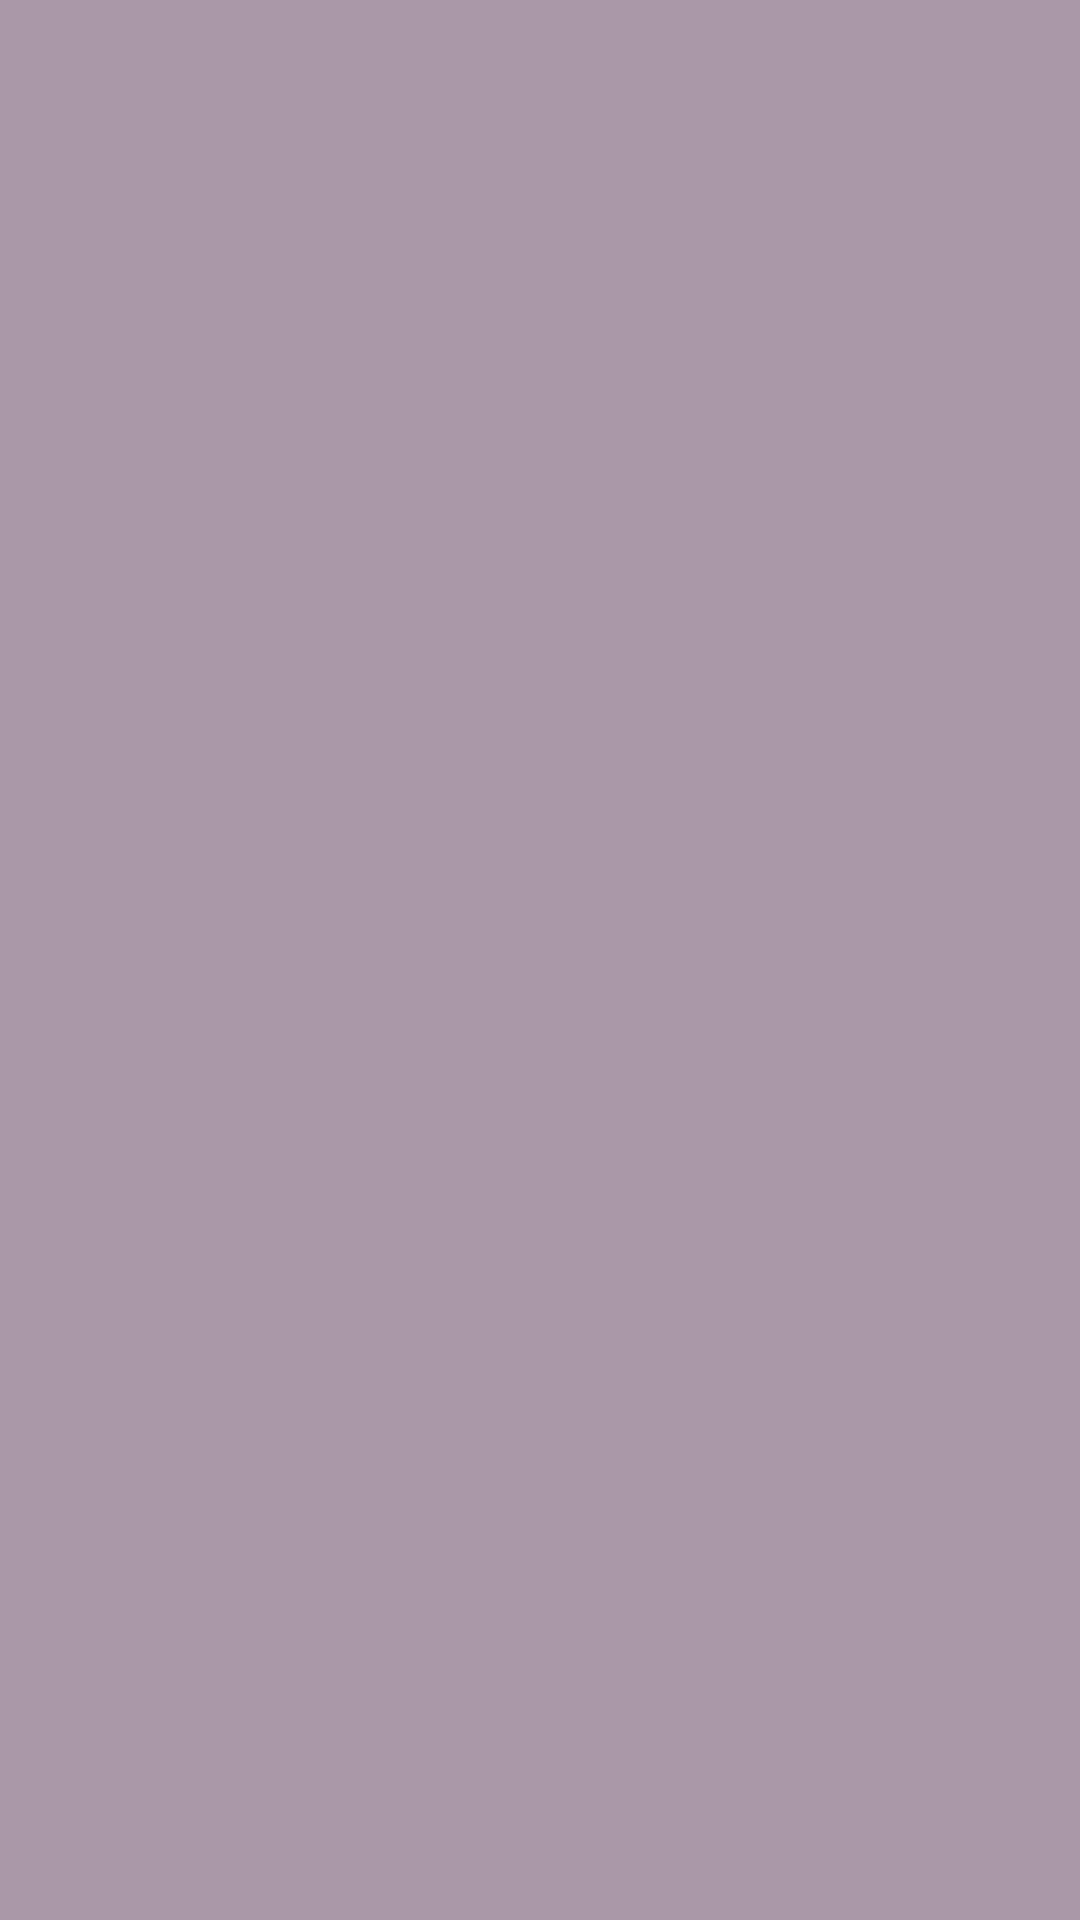 1080x1920 Rose Quartz Solid Color Background